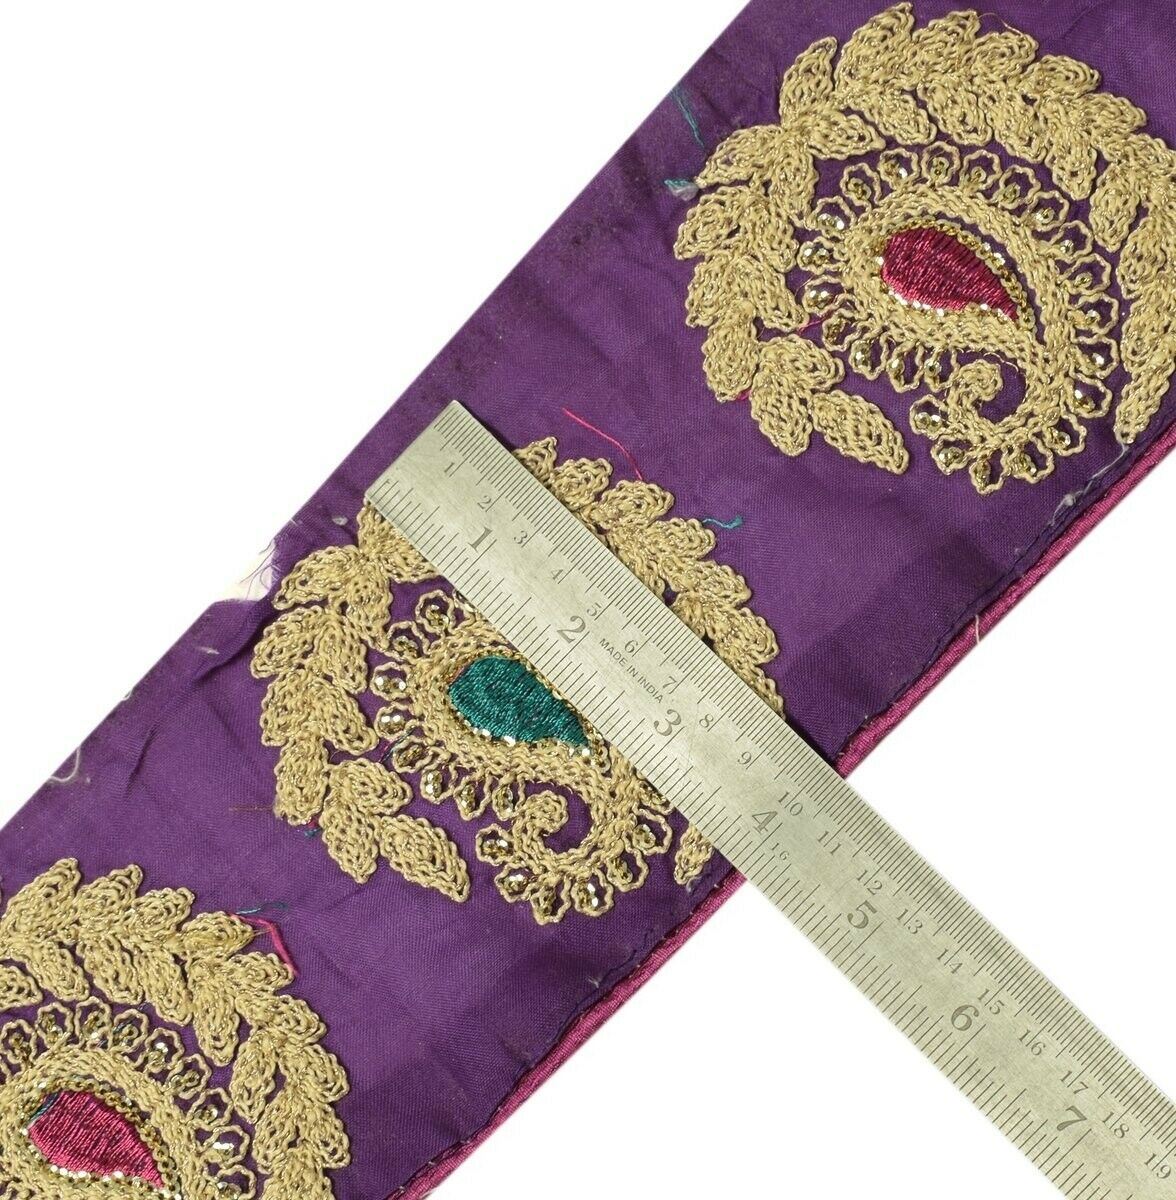 Vintage Sari Border Indian Craft Trim Embroidered Rope Stitch Purple Ribbon Lace